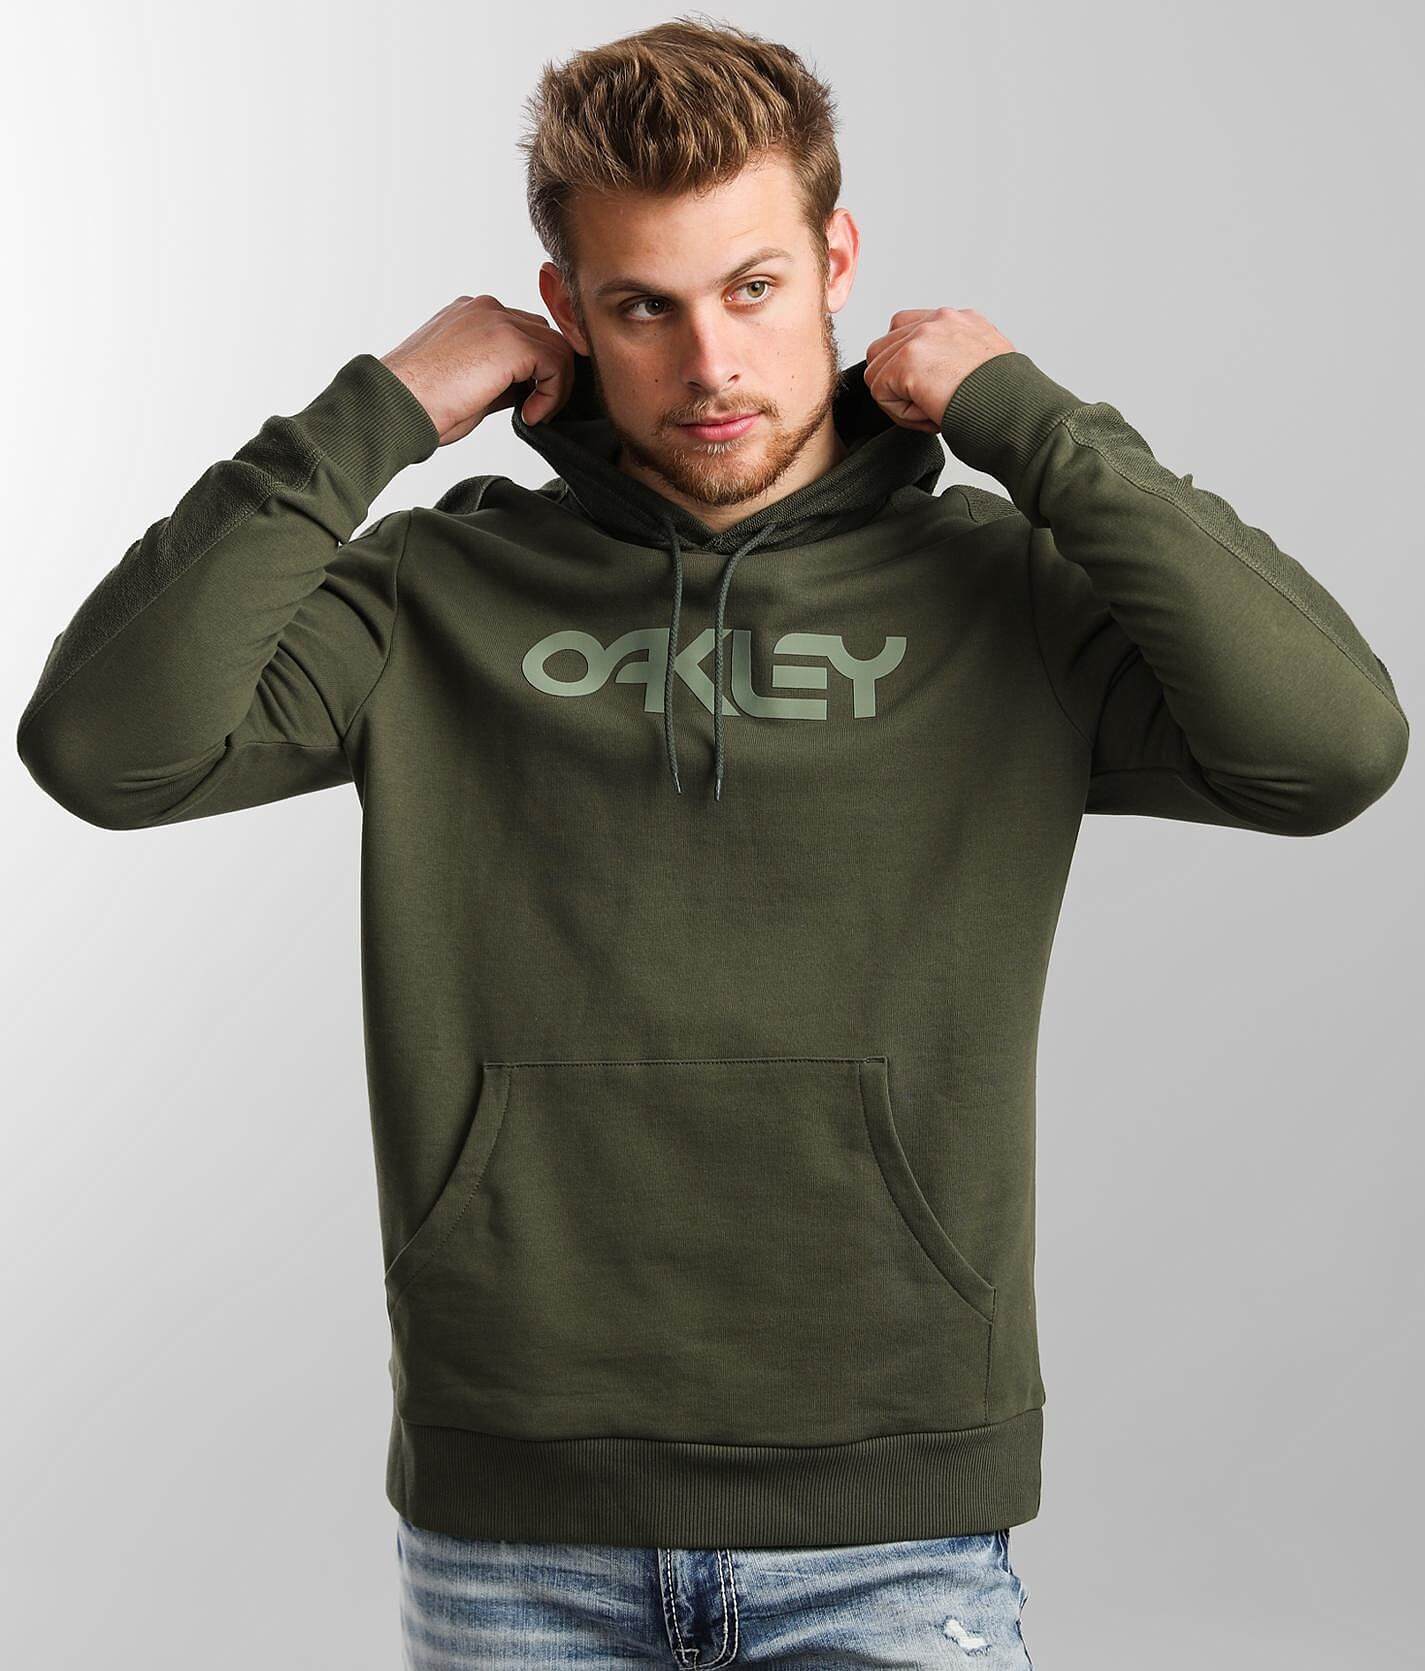 Oakley Sweatshirt Flash Sales, 57% OFF | www.ingeniovirtual.com